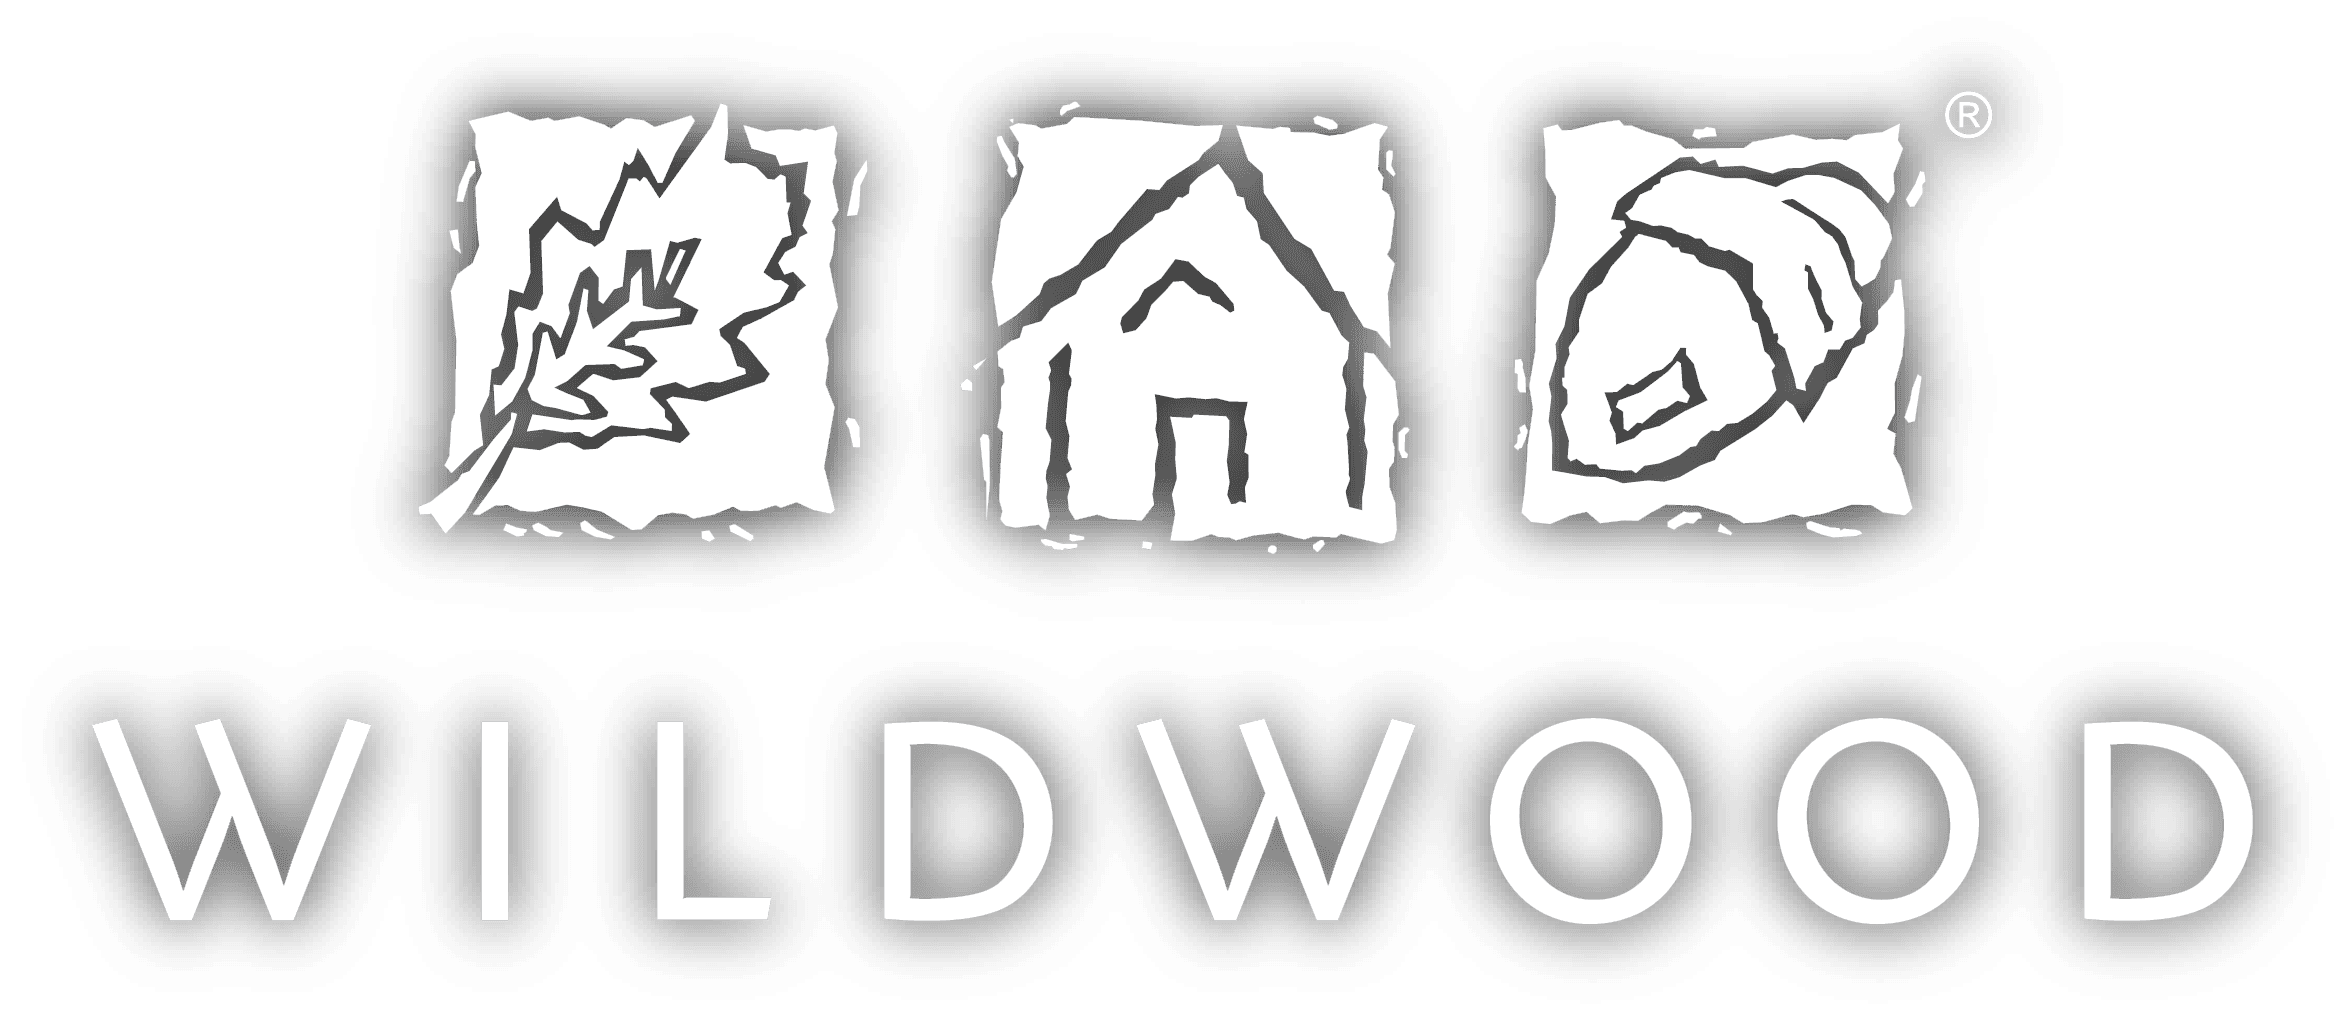 Demographics Logo - Demographics | Wildwood, MO - Official Website